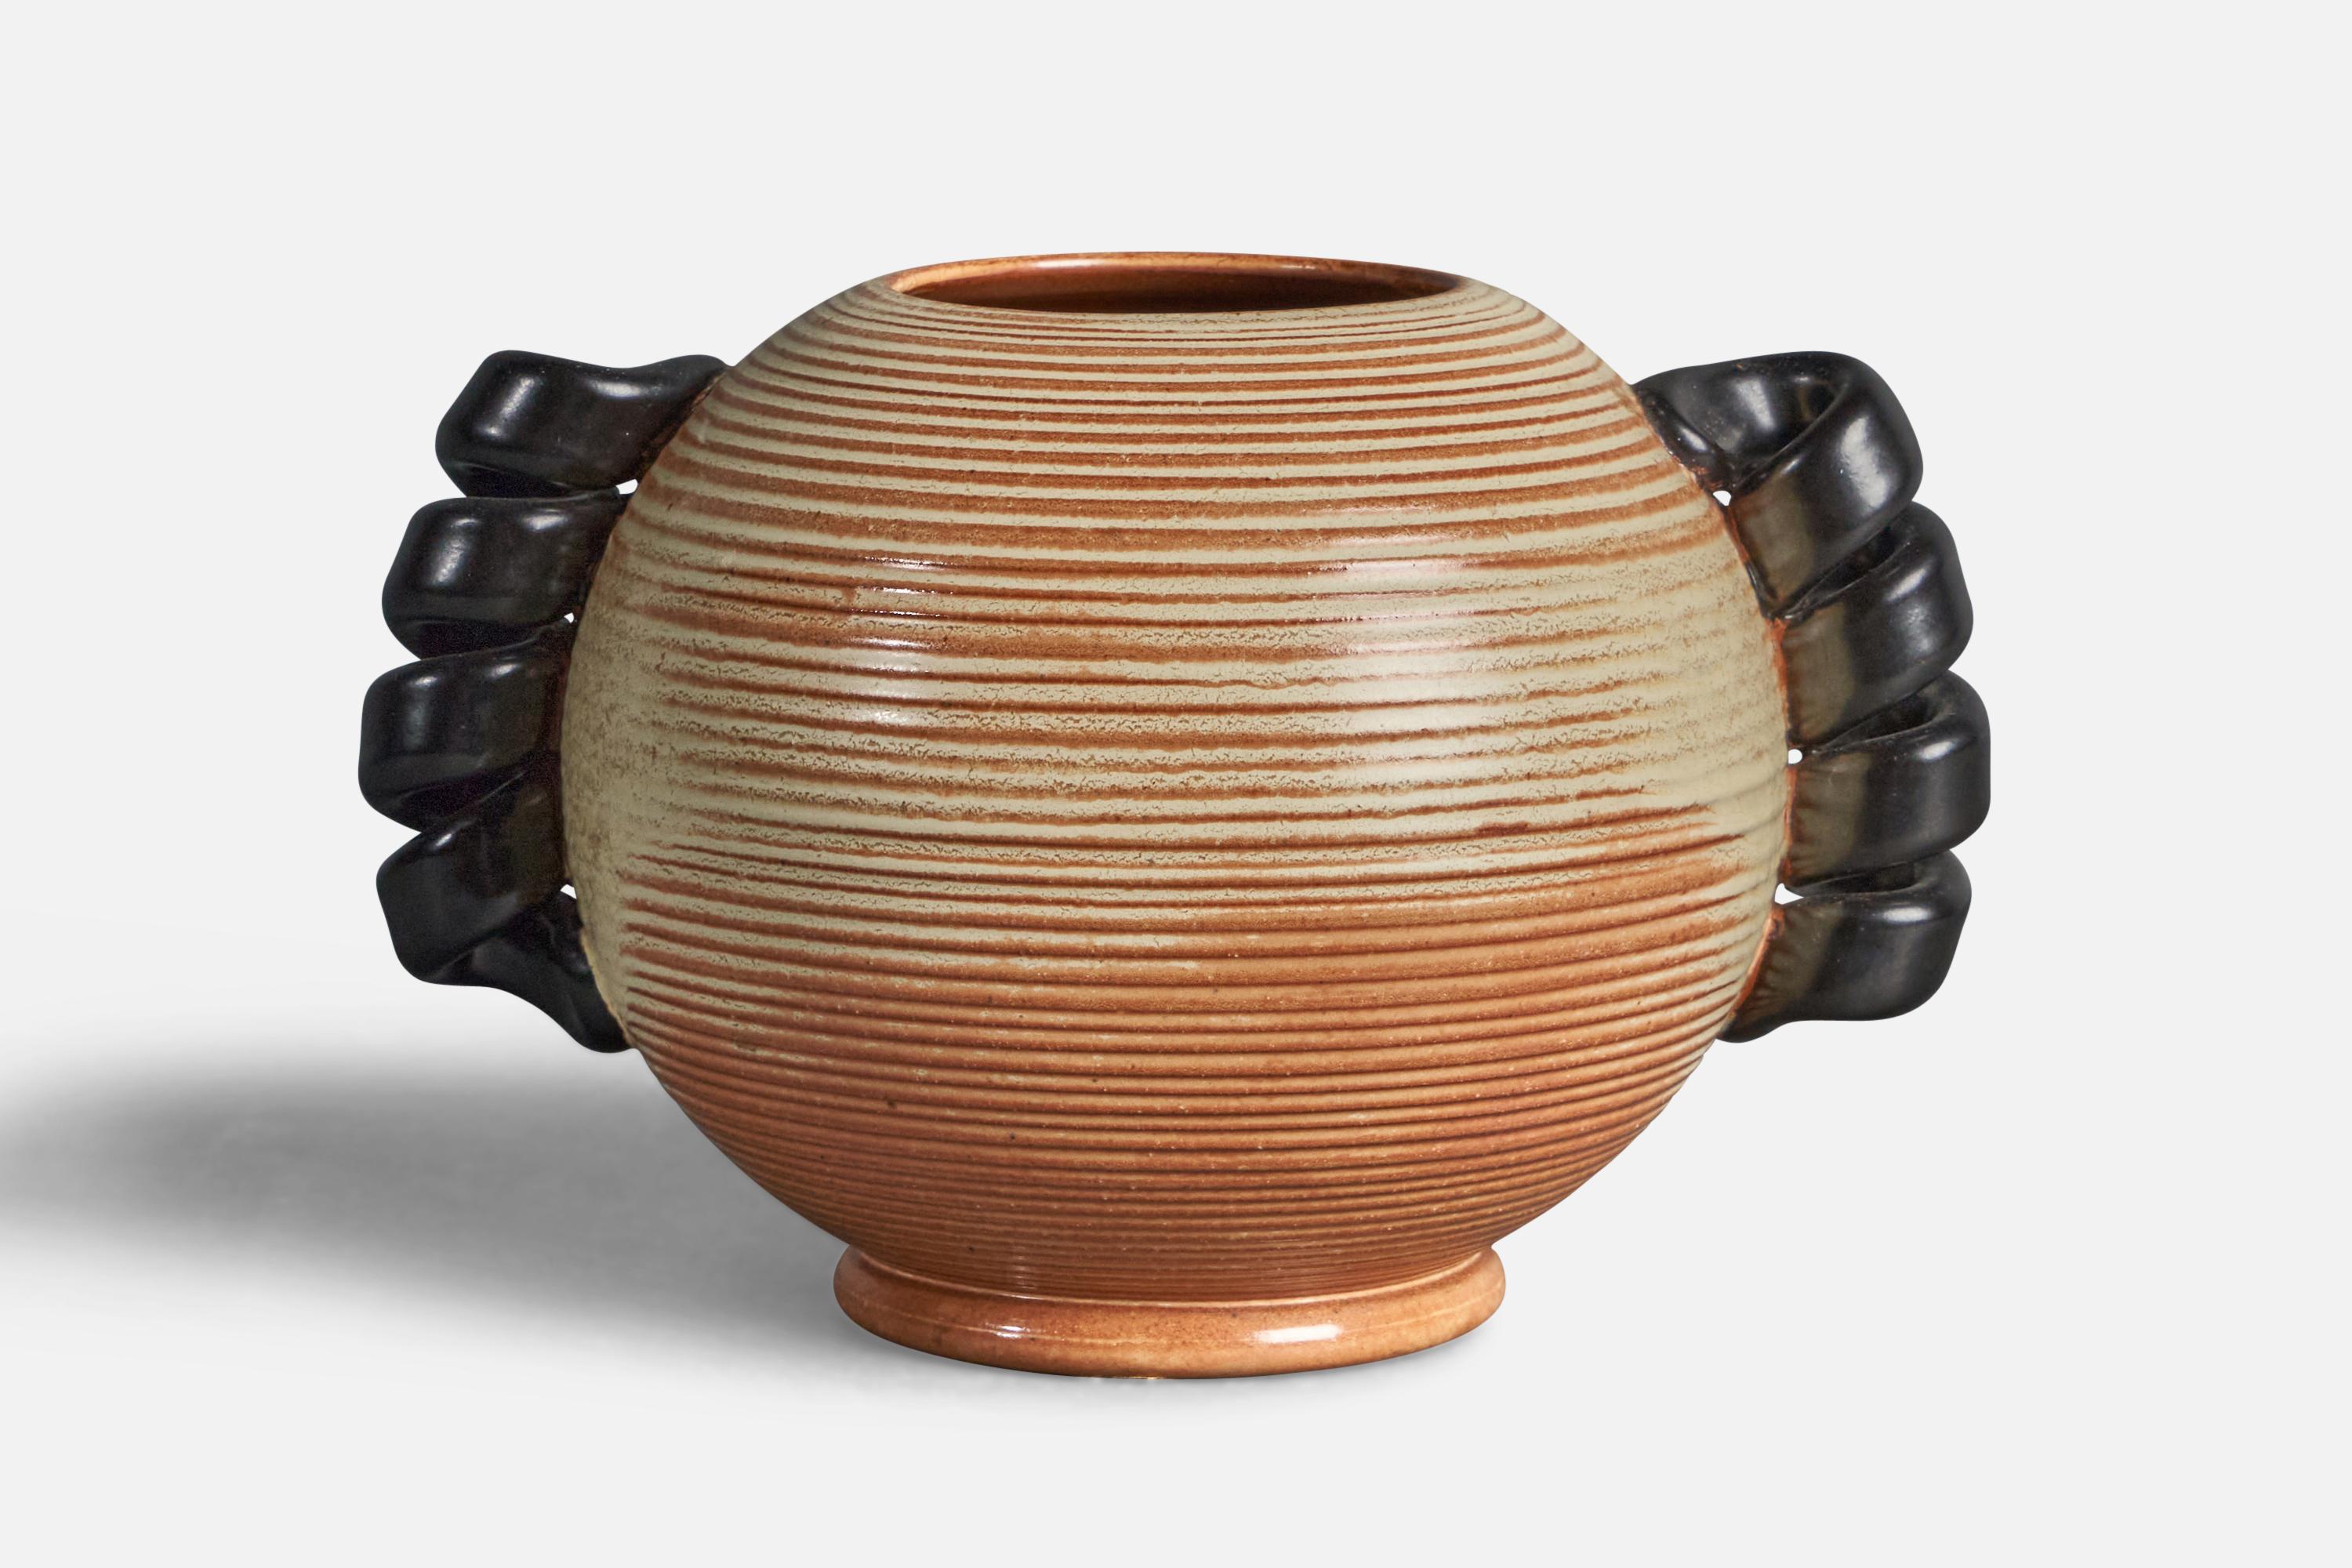 A black, beige and orange-glazed stoneware vase, designed and produced by Andersson & Johansson, Höganäs, Sweden, c. 1940s.